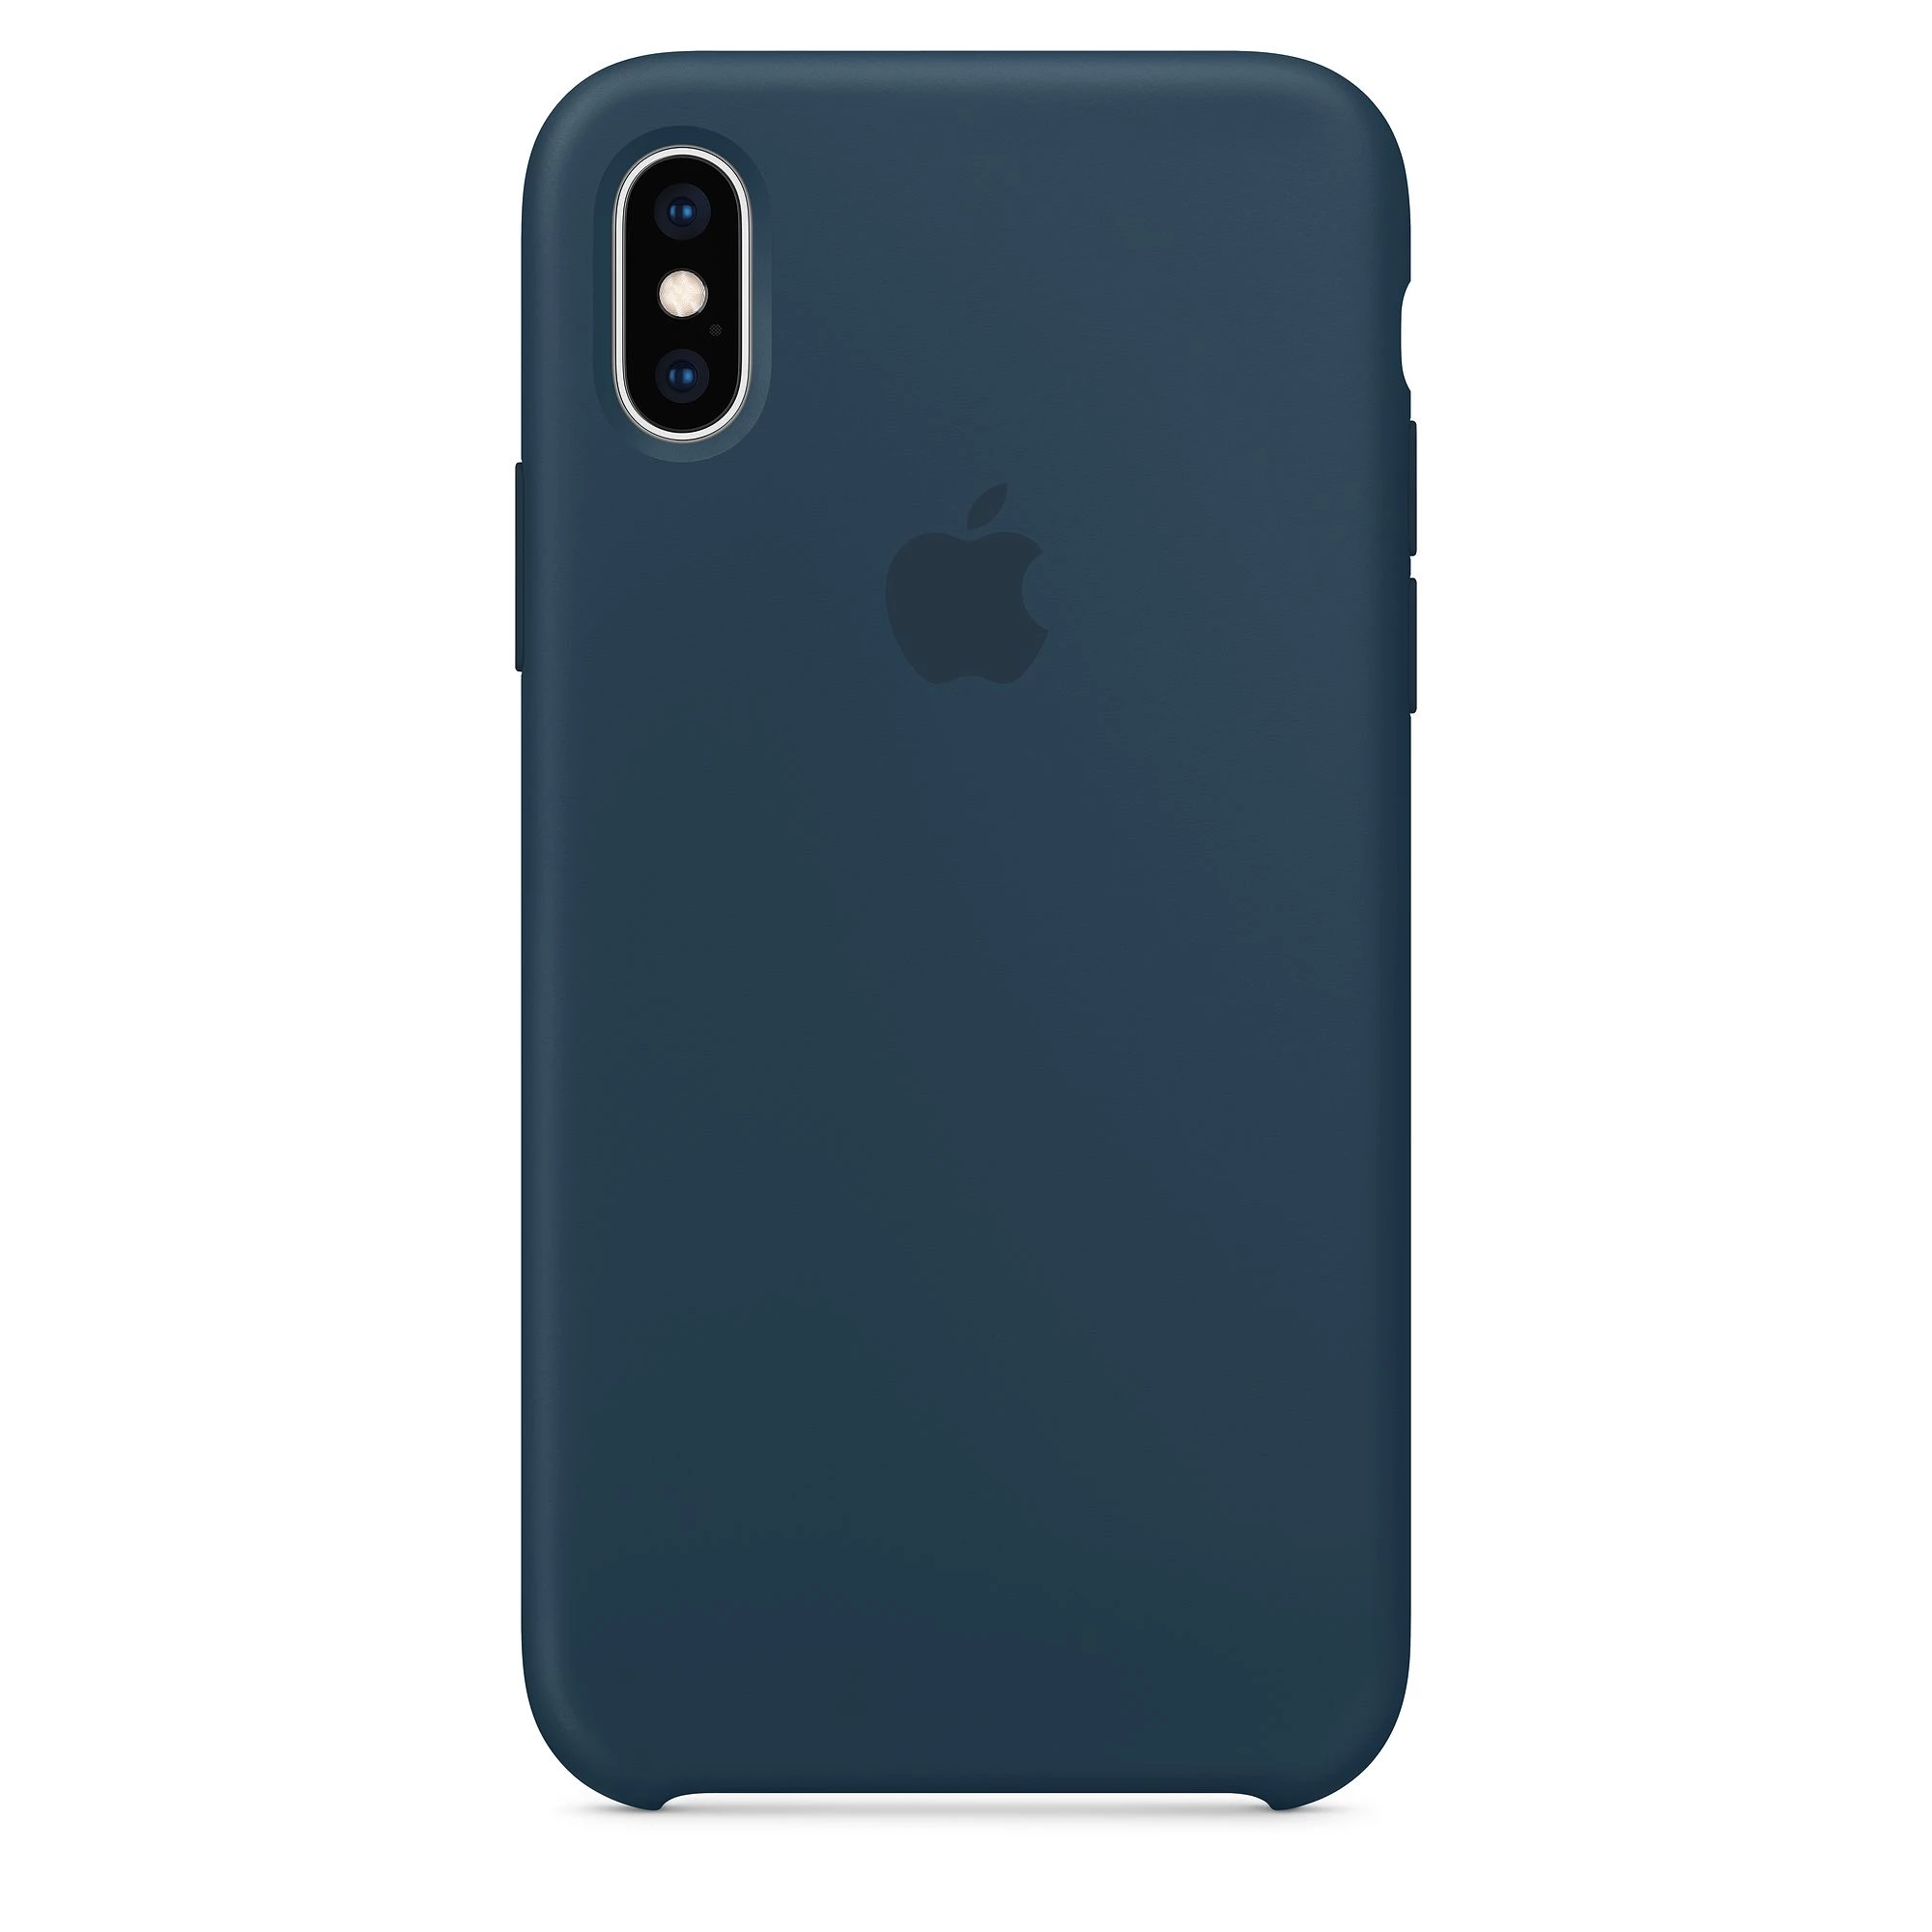 Apple iPhone X / XS Silicone Case LUX COPY - Pacific Green (MUJU2)